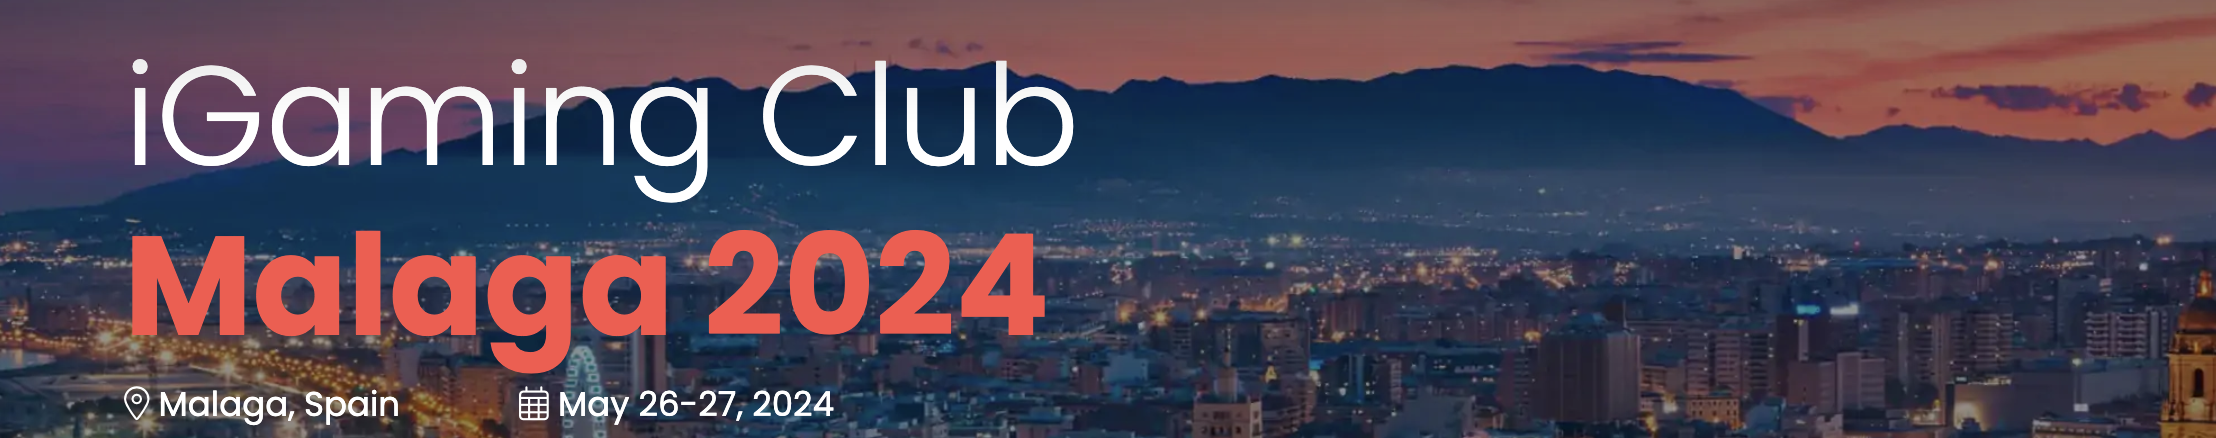 iGaming Malaga Club 2024